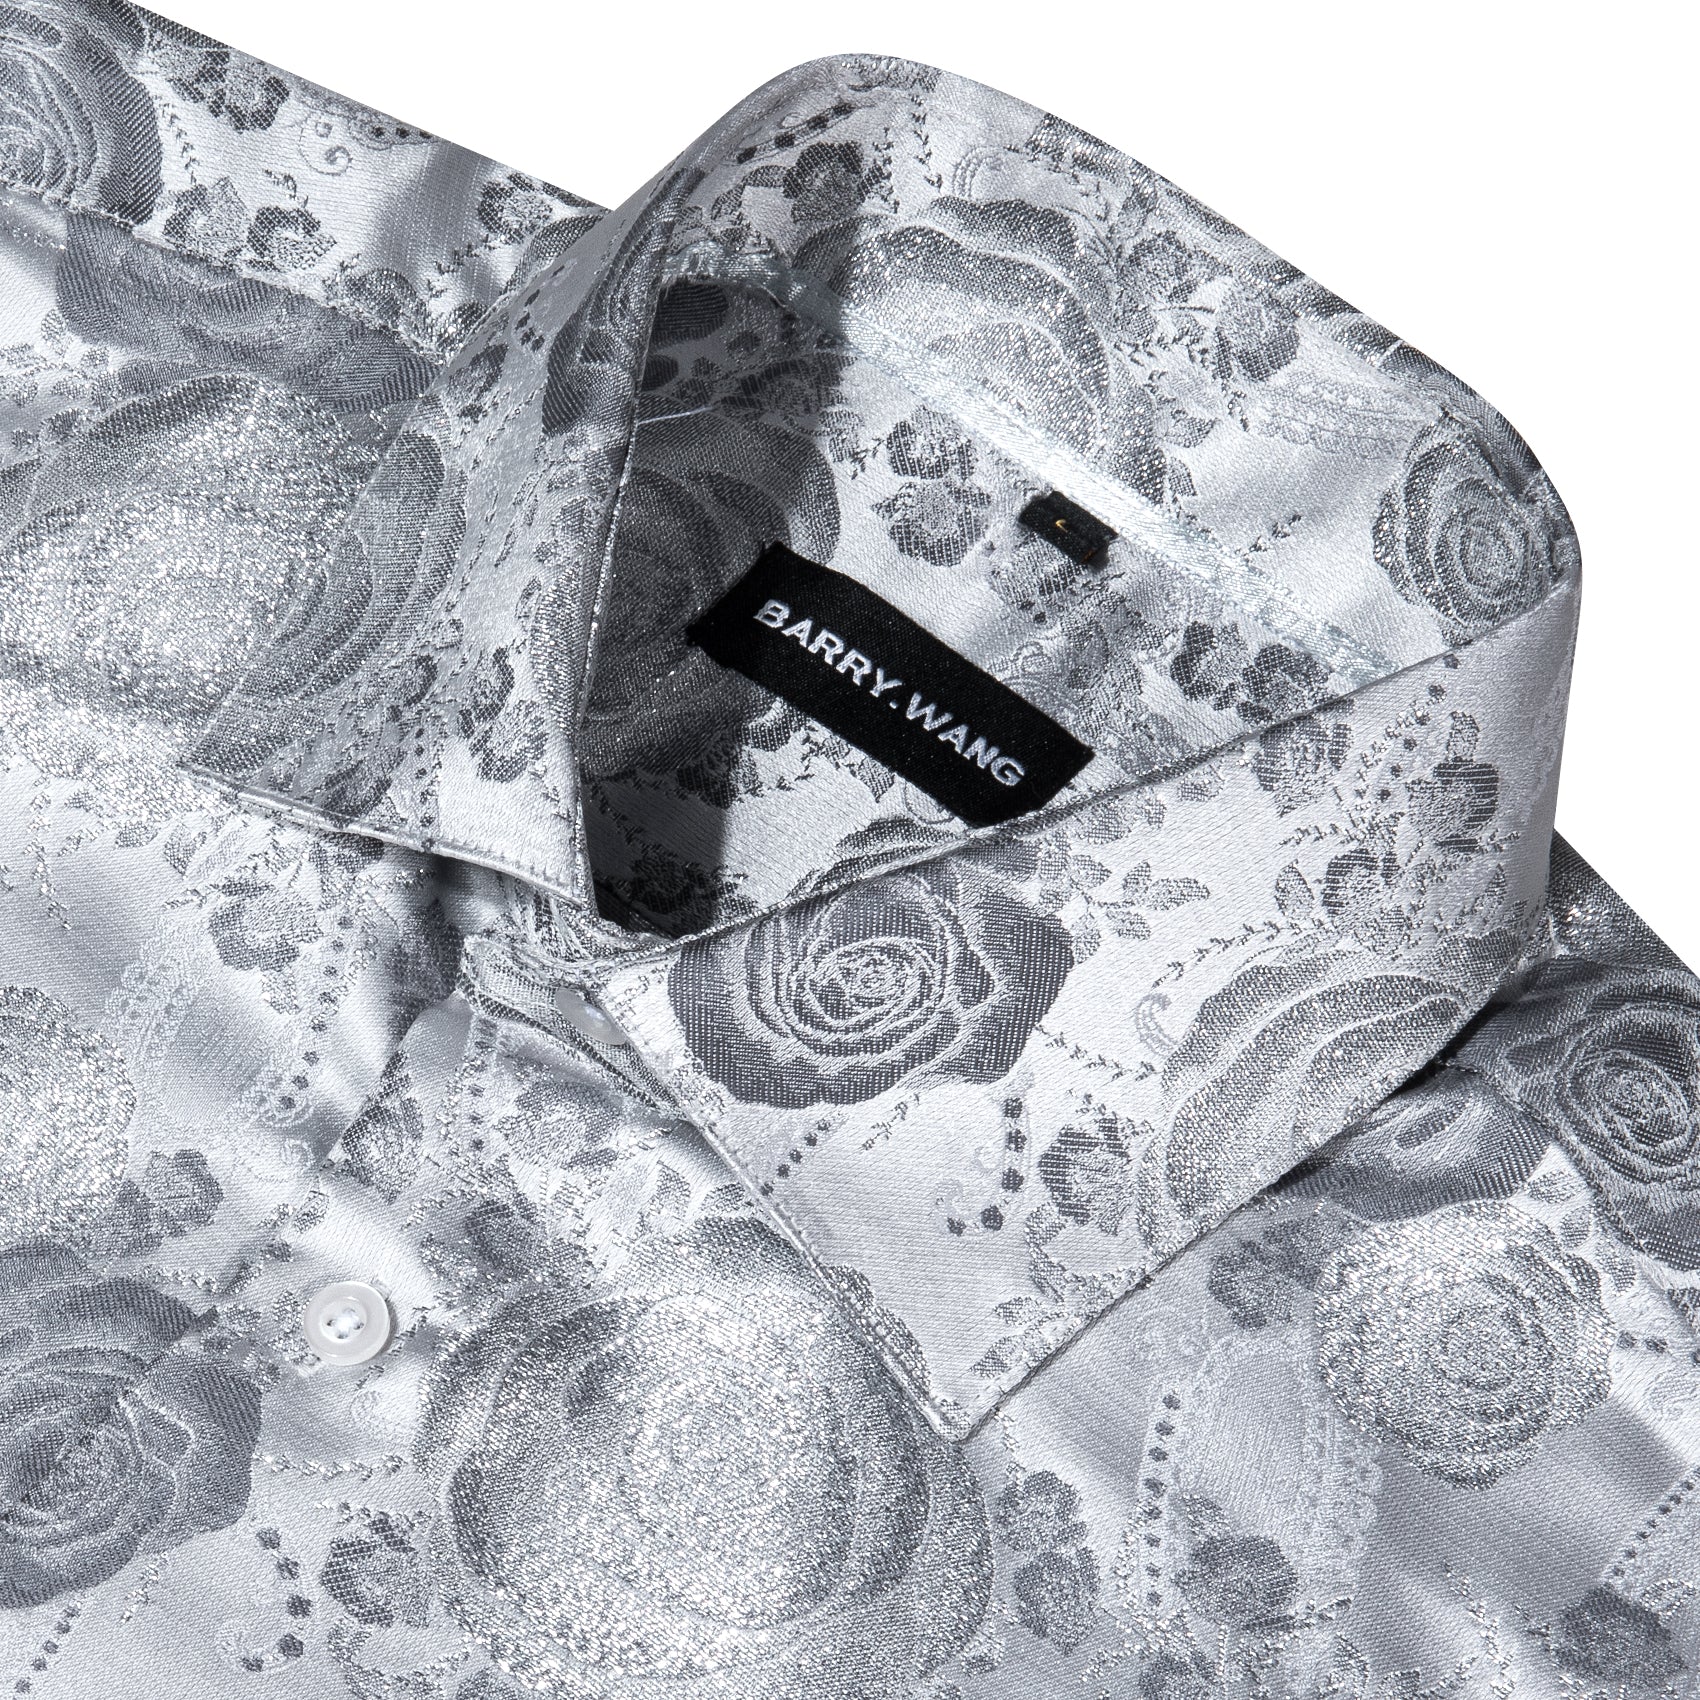 Barry.wang Button Down Shirt Silver Flower Men's Silk Long Sleeve Shirt New Fashion